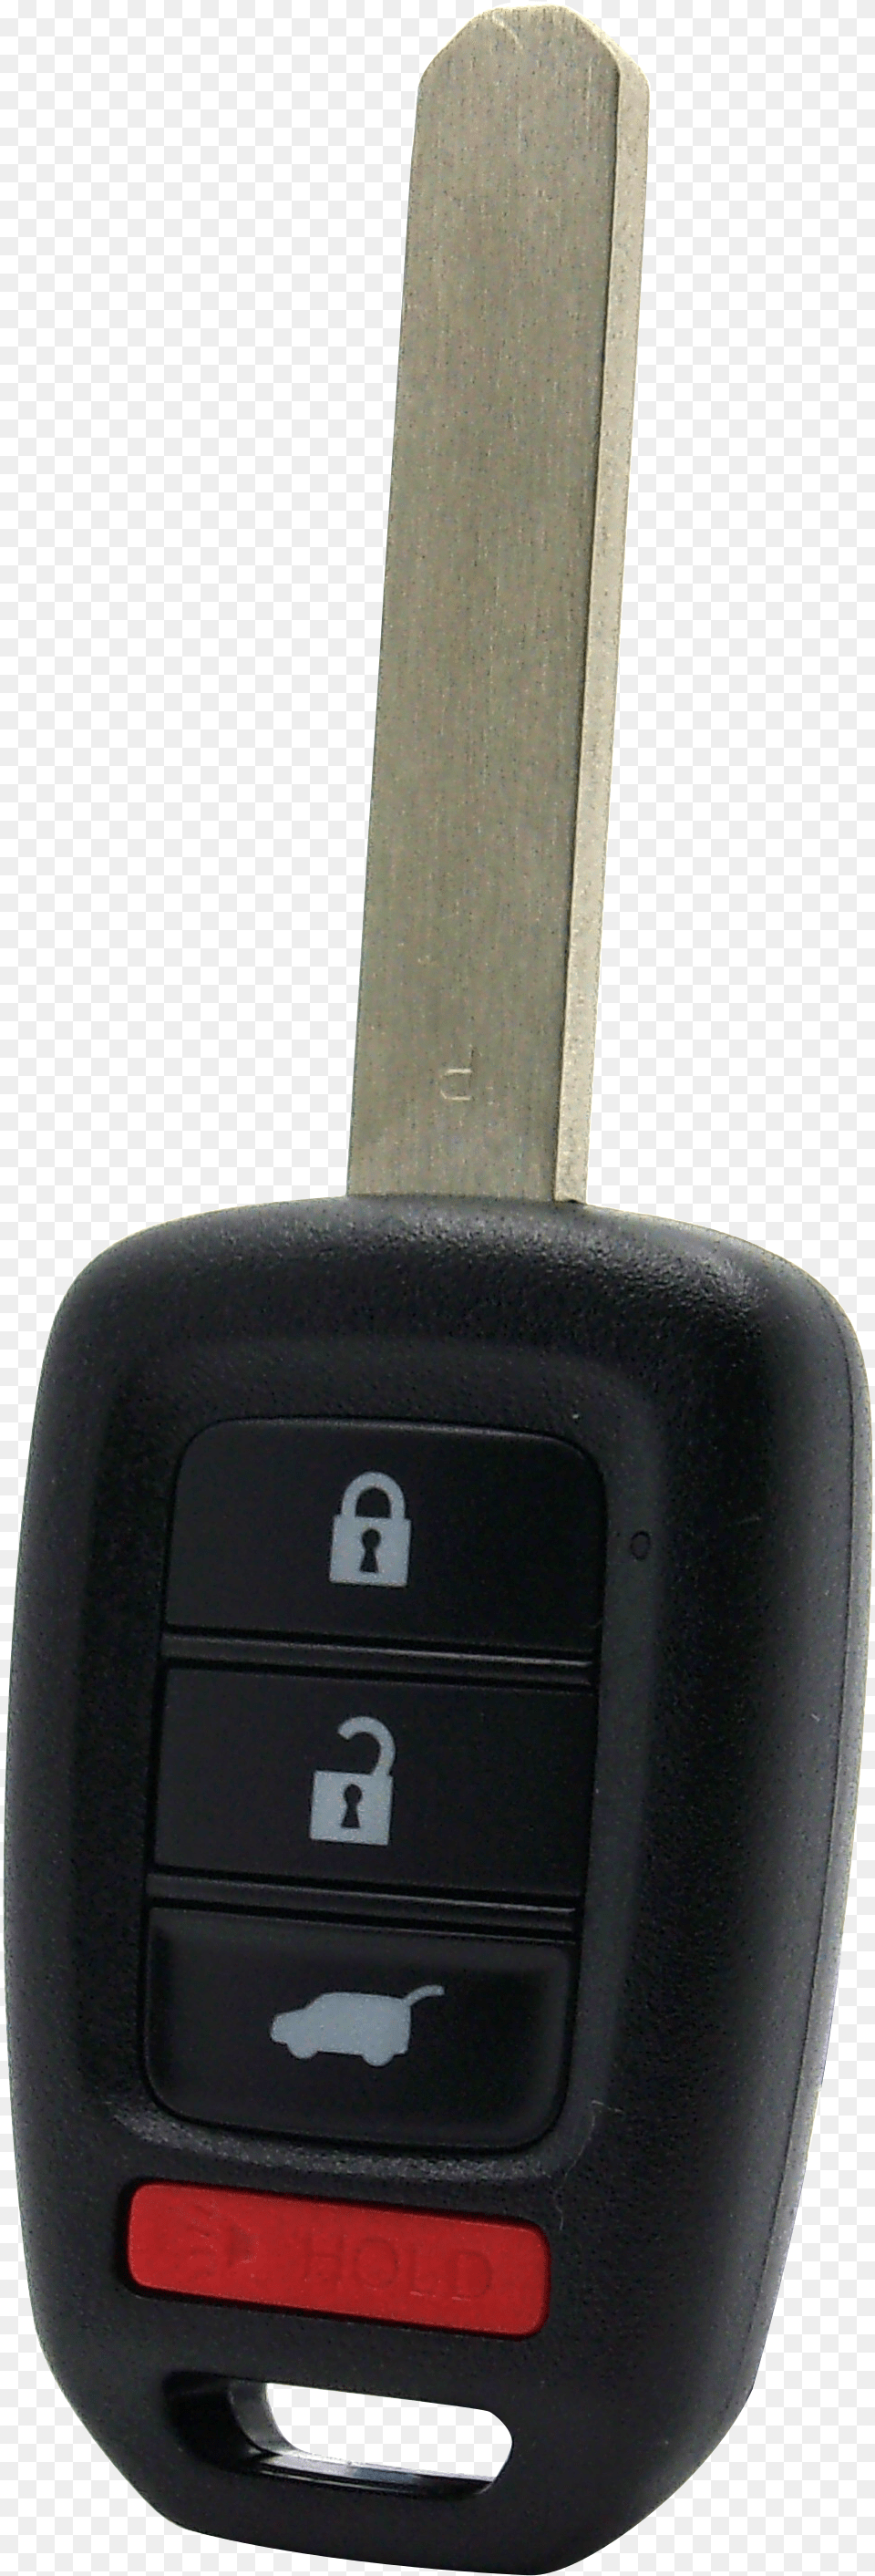 Replacement Car Keys And Remotes For 2019 Honda Hr V 2014 Honda Crv Key Png